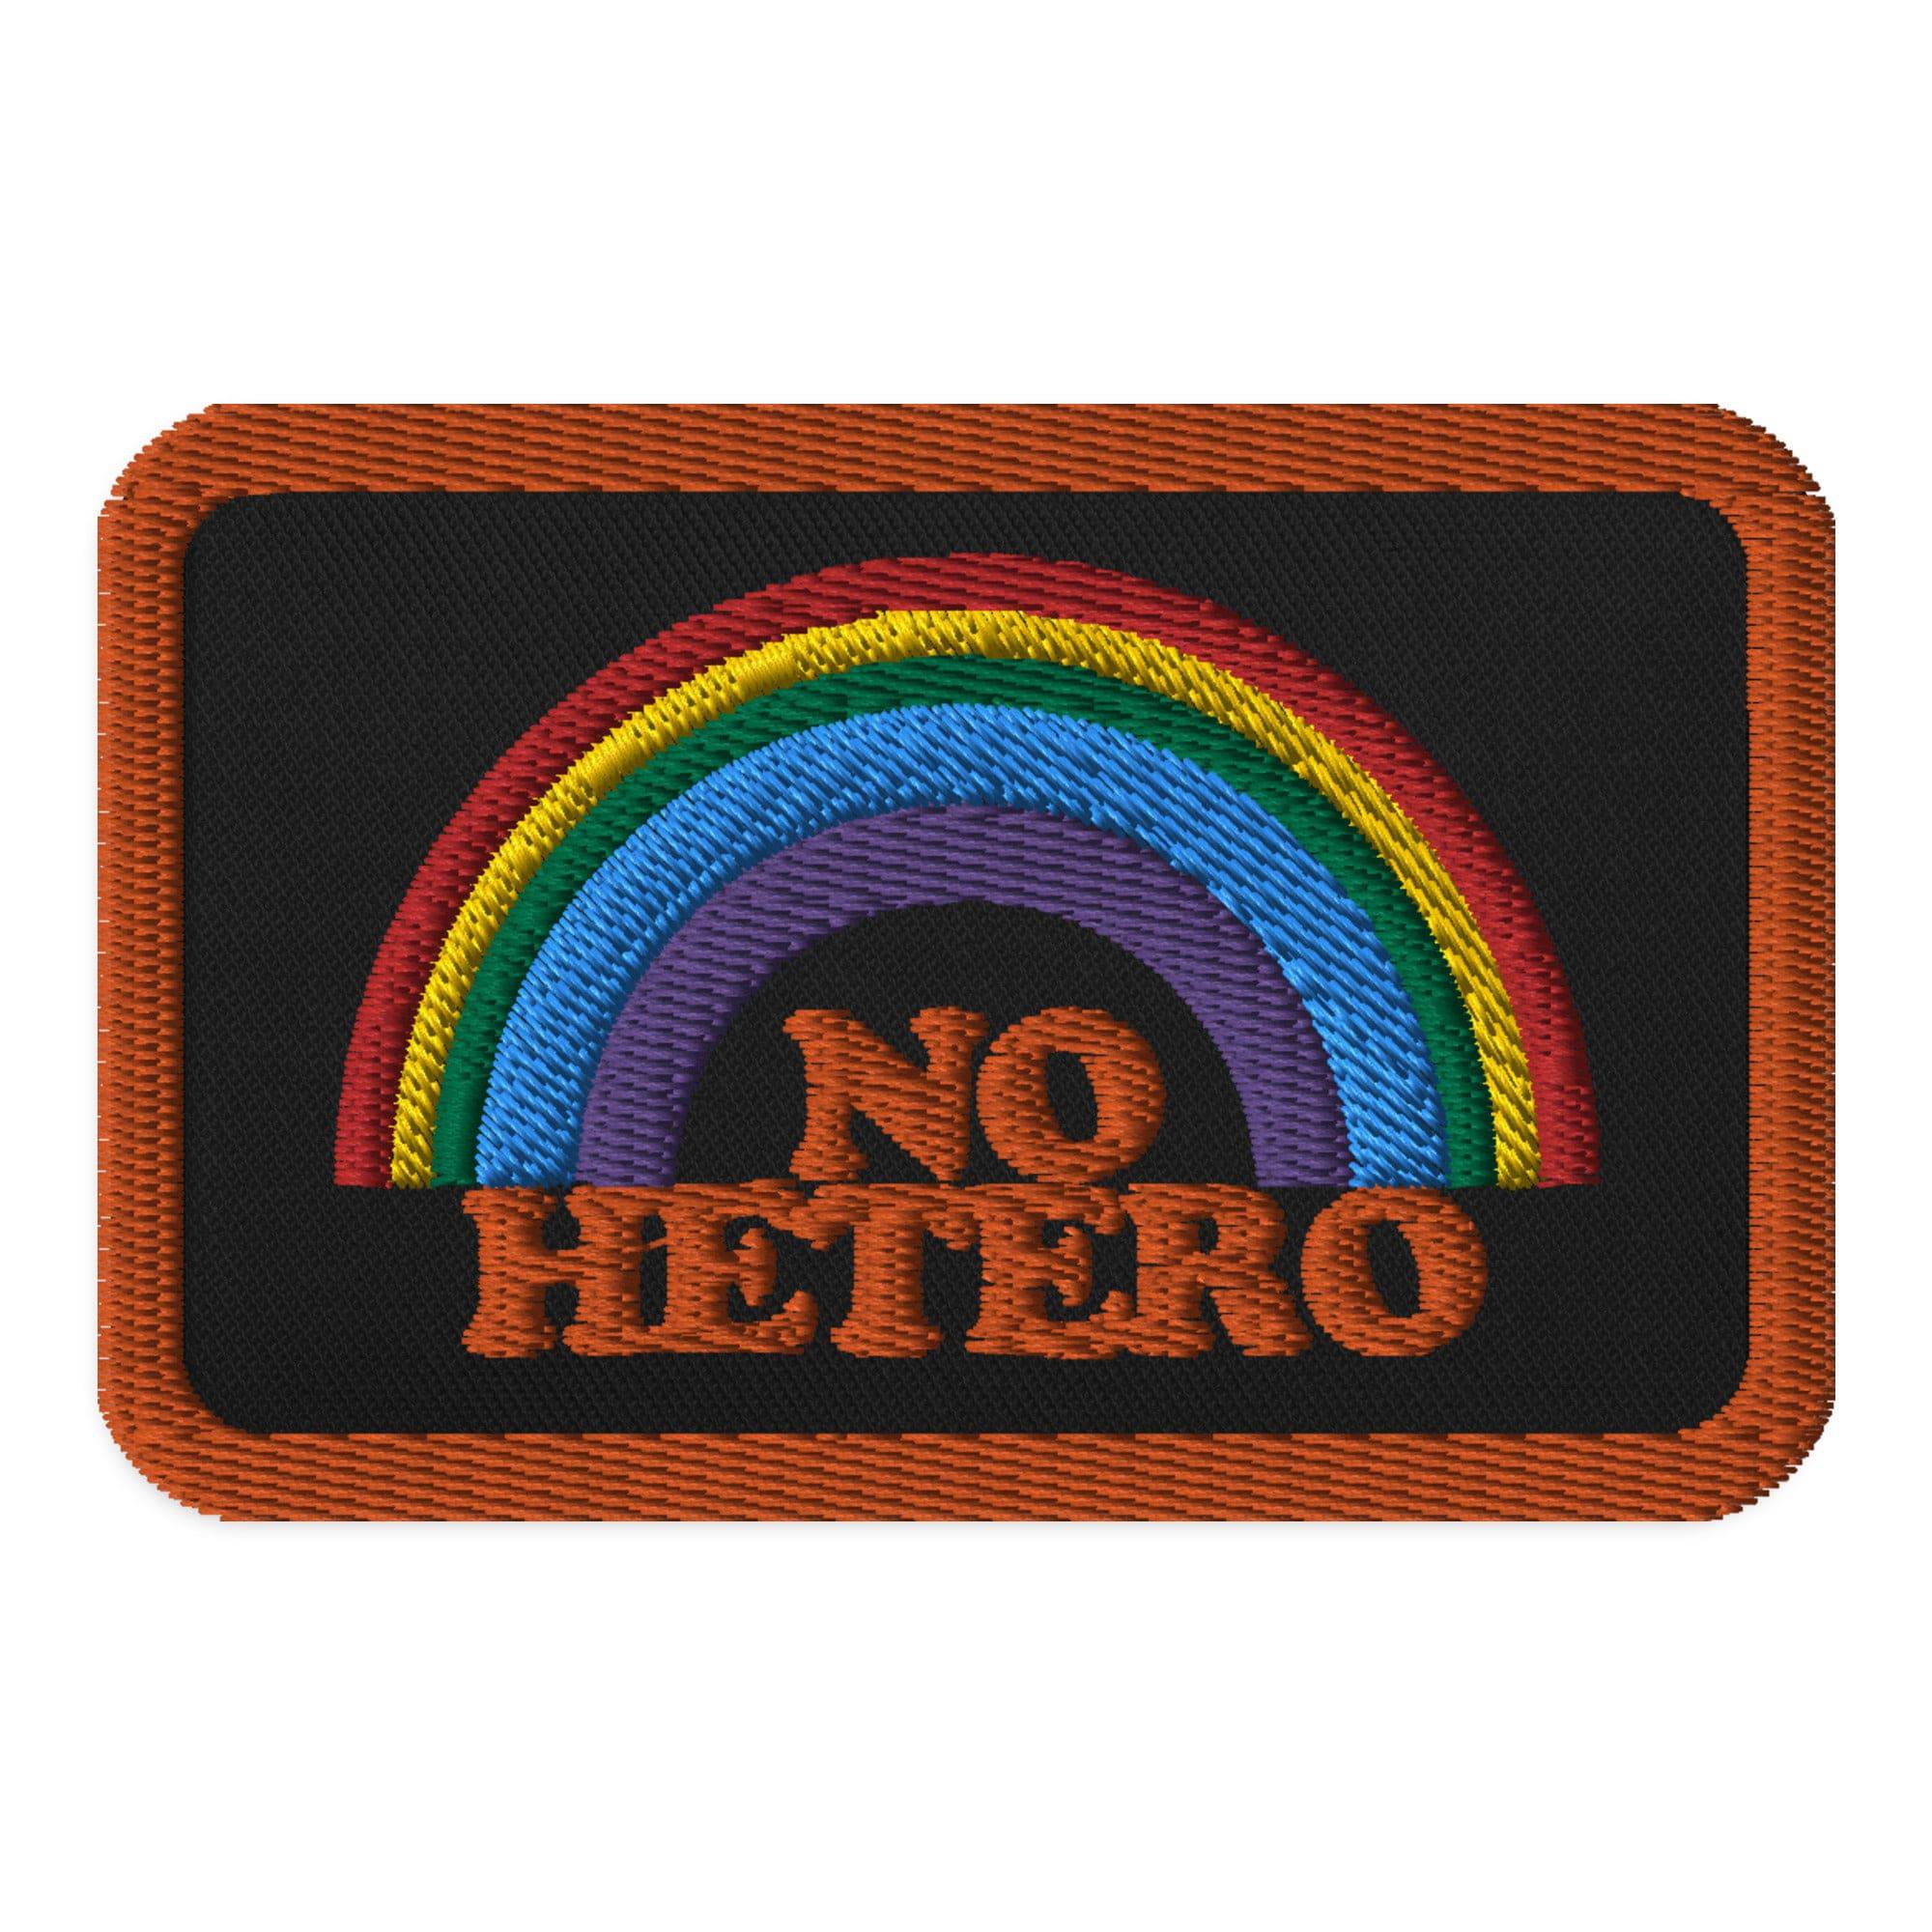 No Hetro Gay Pride Embroidered patch